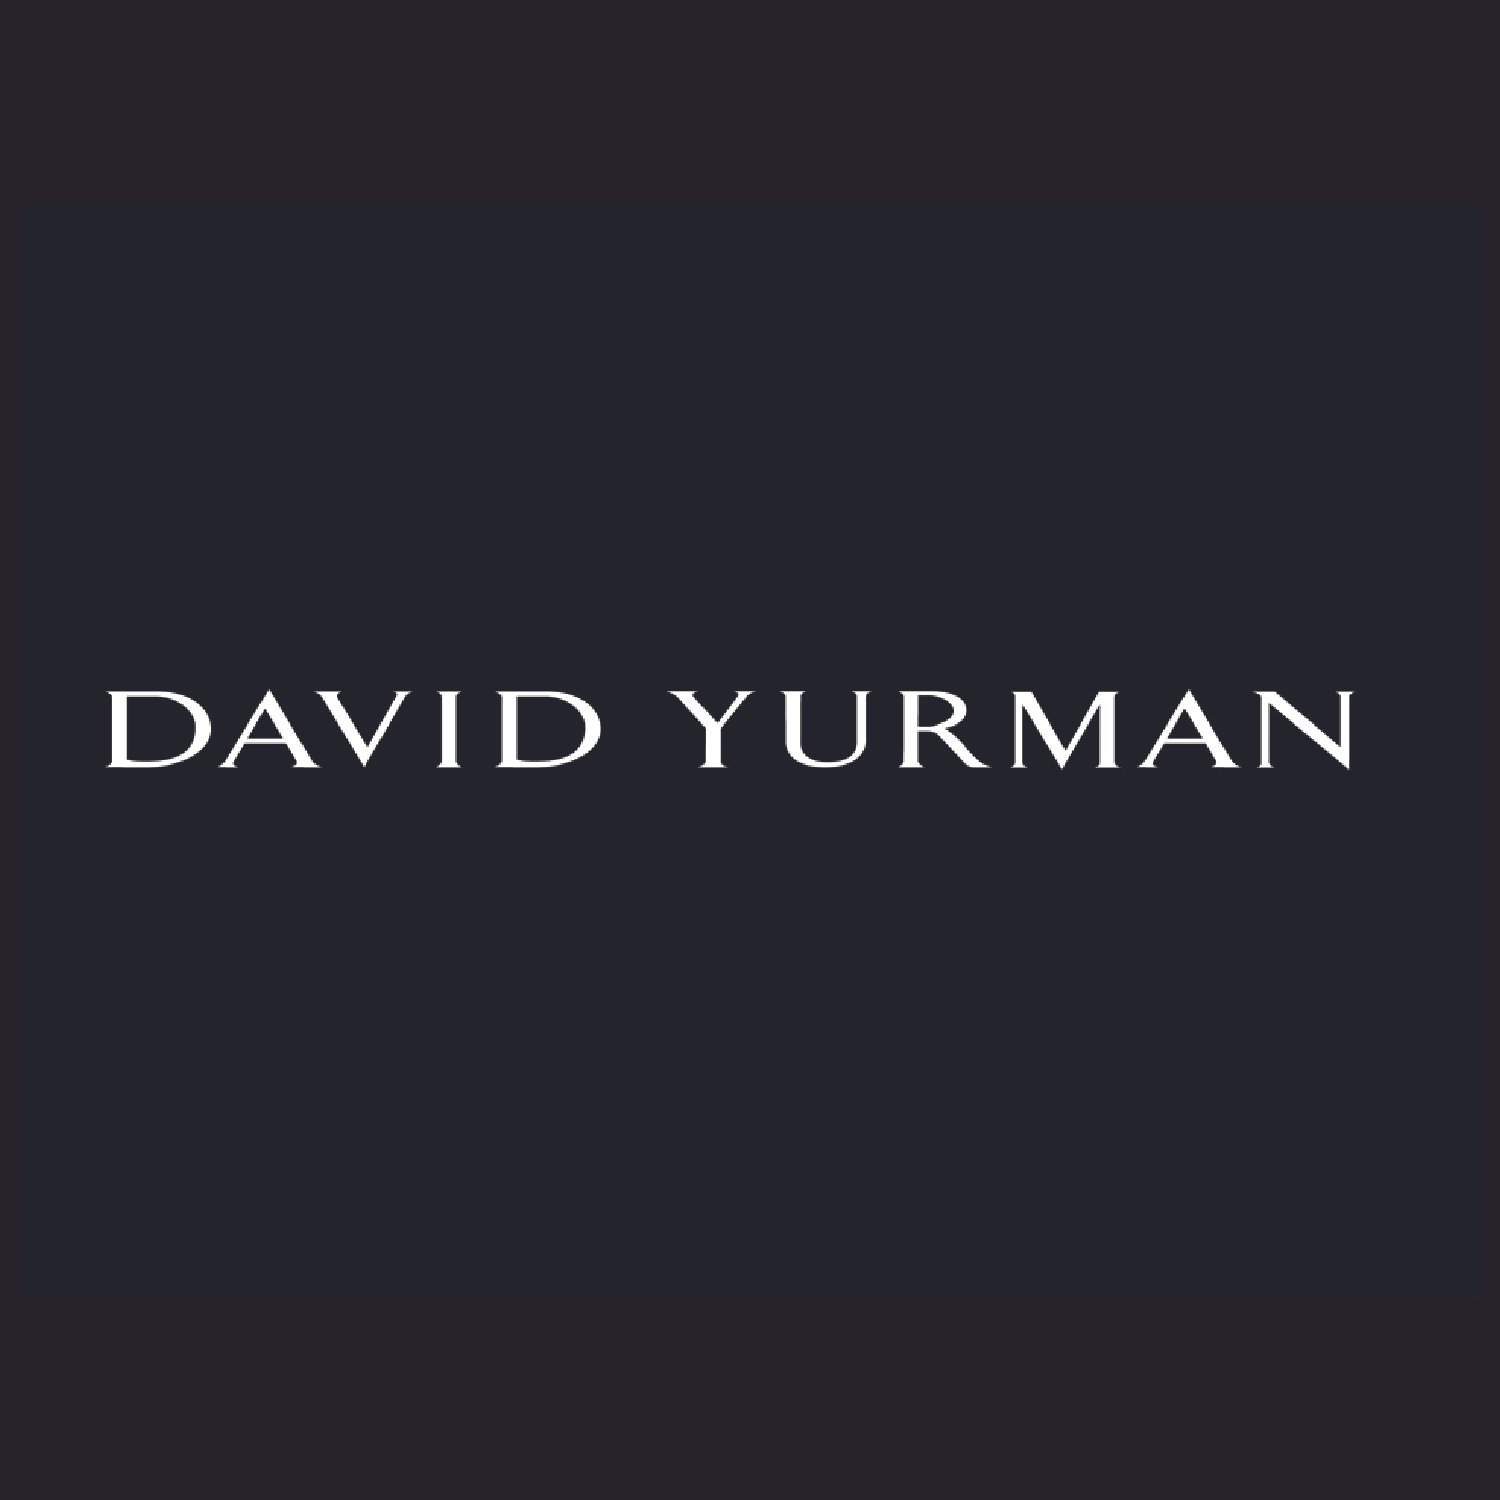 DavidYurman-01.jpg